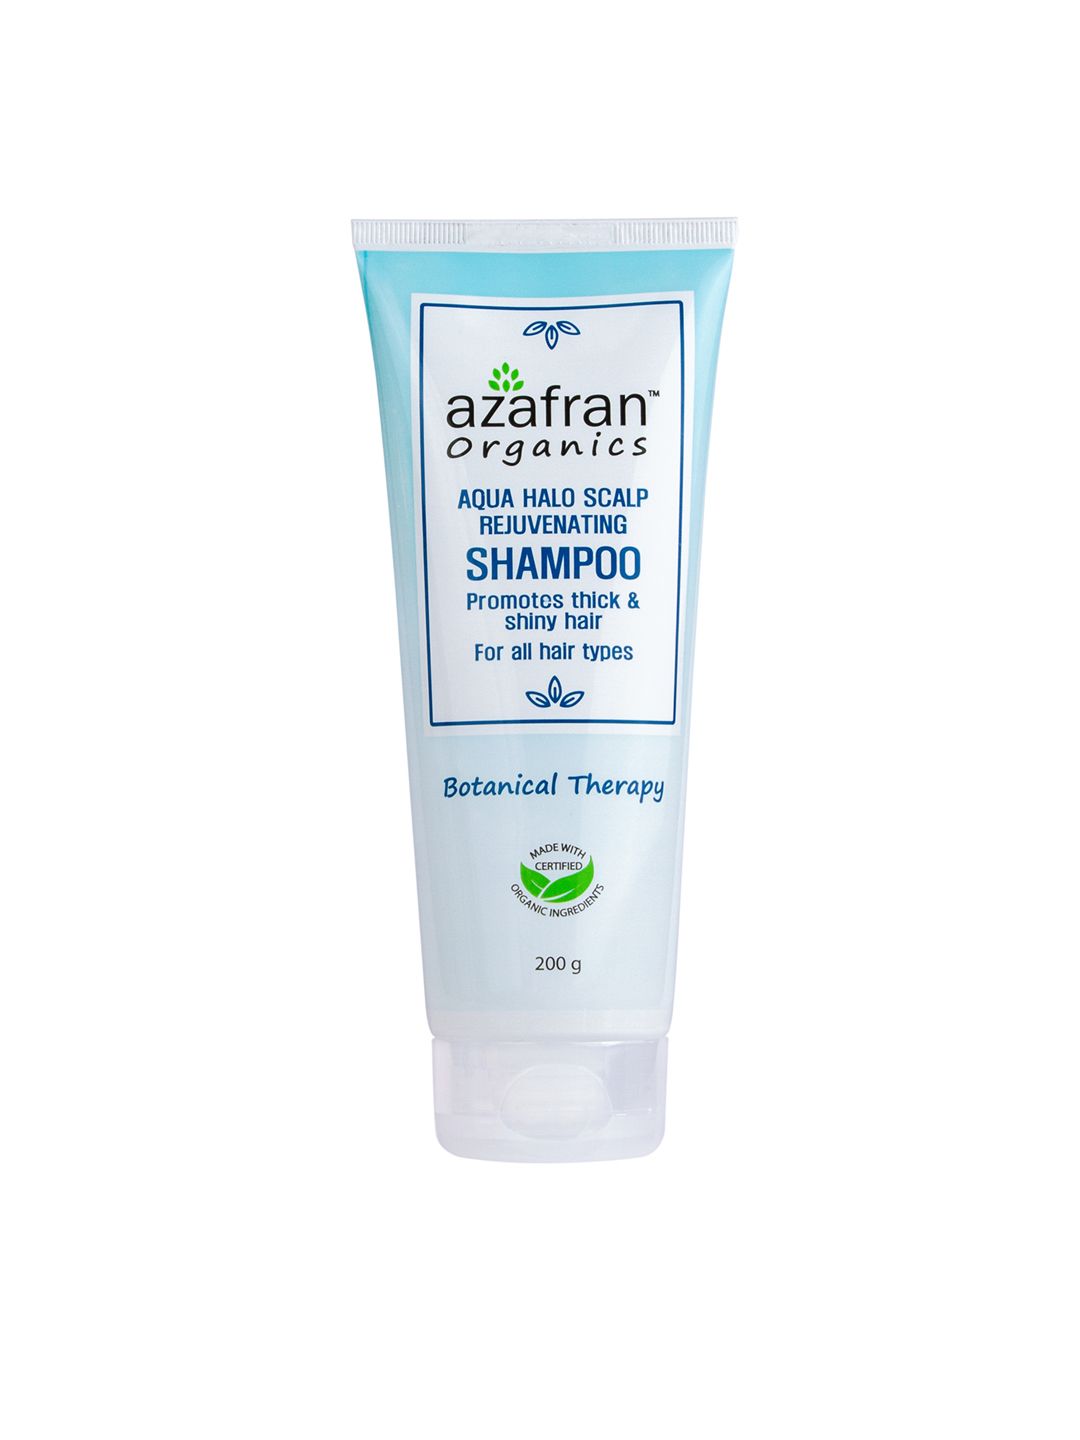 Azafran Aqua Halo Scalp Rejuvenating Shampoo 200 g Price in India